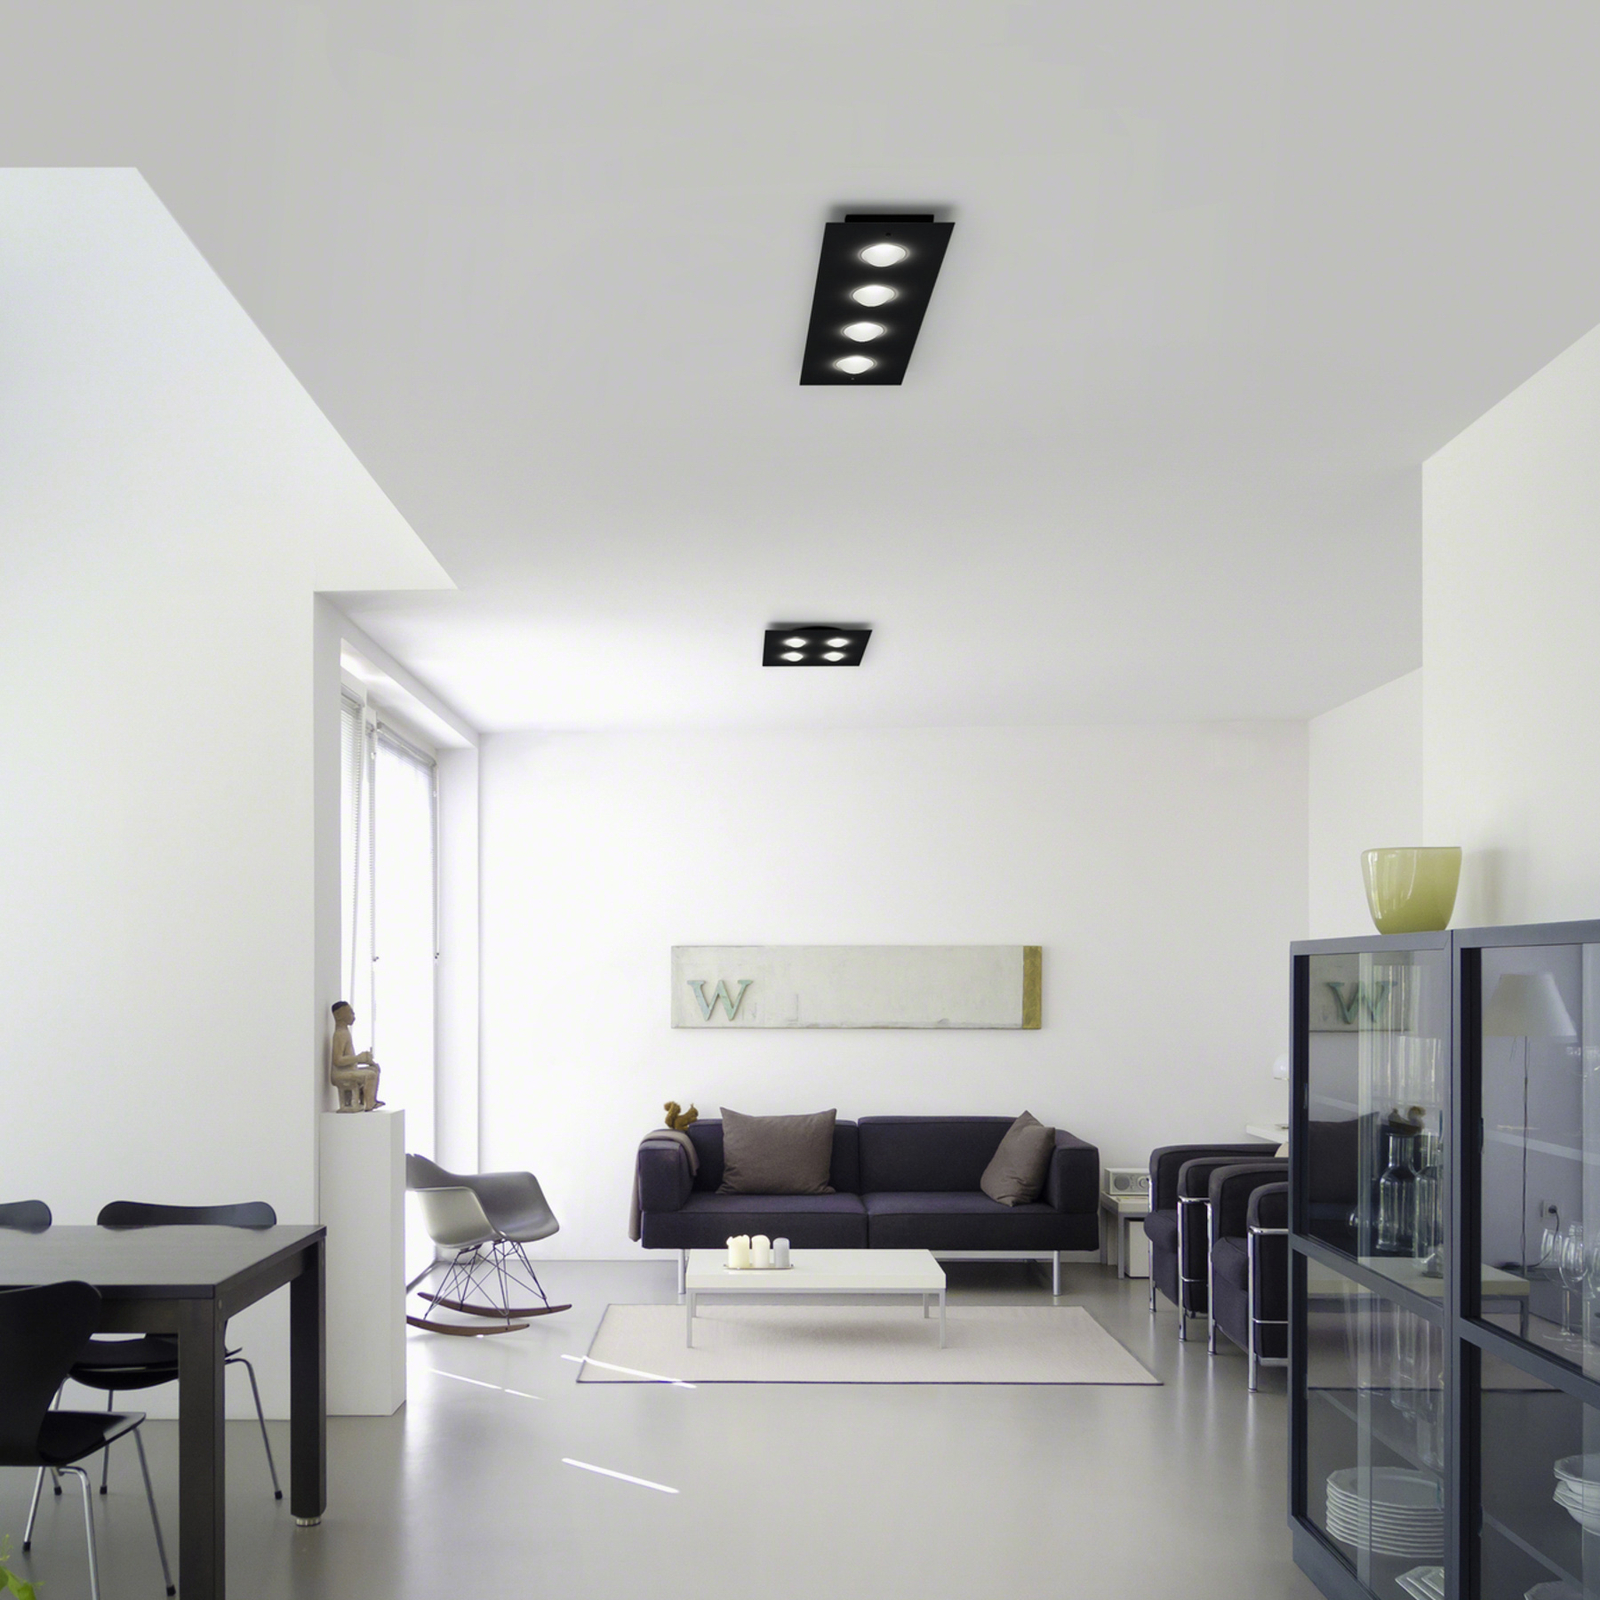 Helestra Nomi LED-Deckenlampe 75x21cm dim schwarz